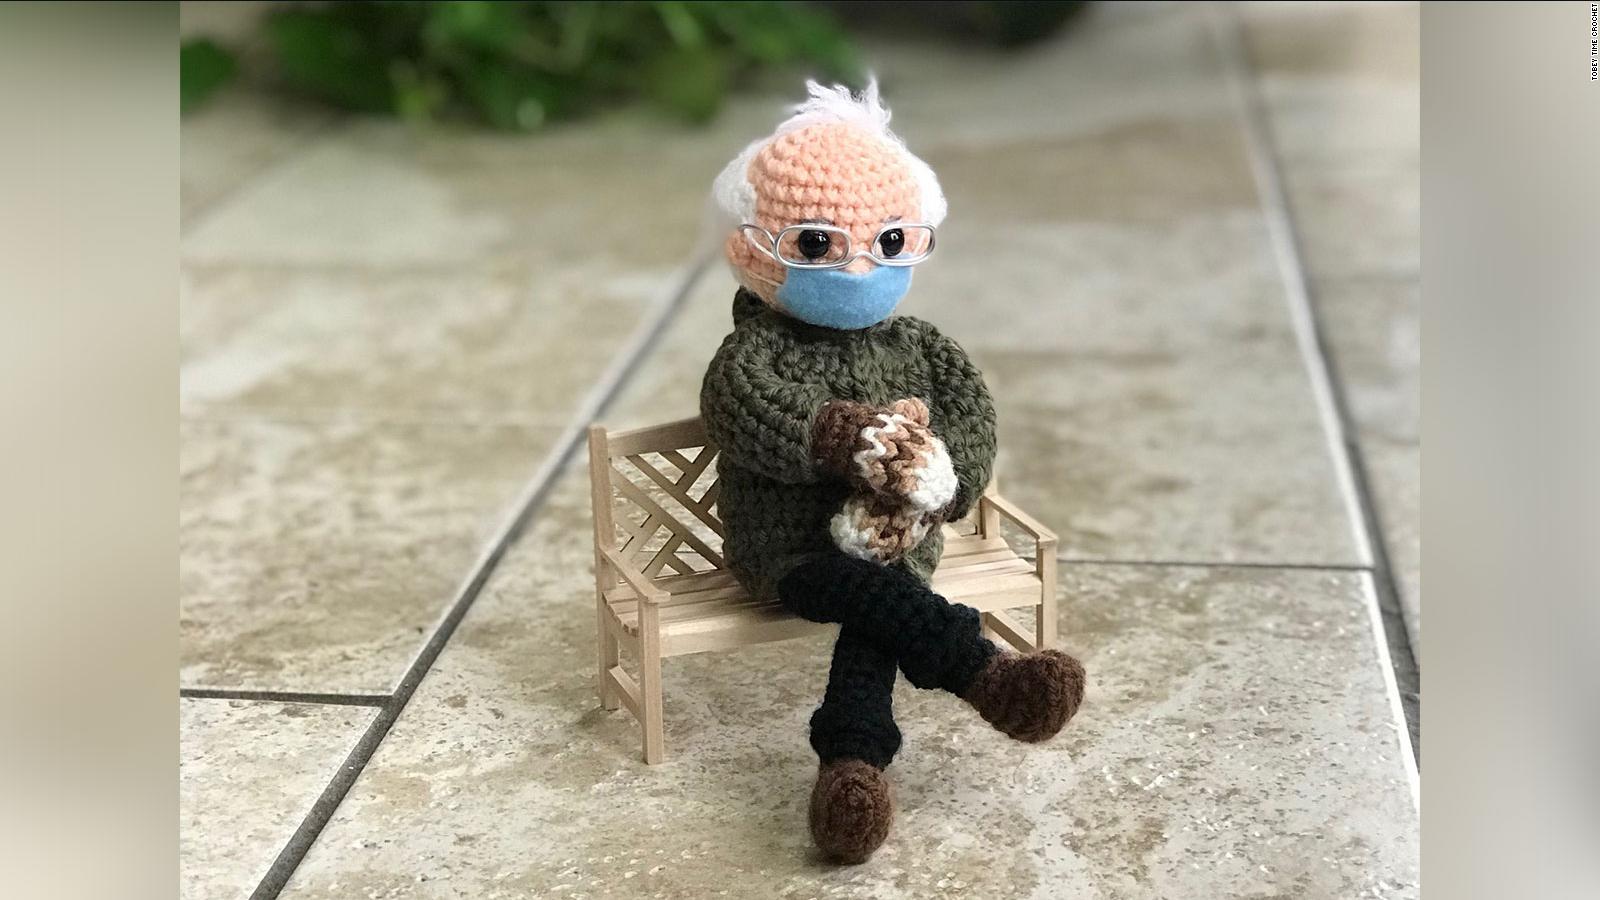 Crocheted Doll Of Viral Bernie Sanders Inauguration Meme Raises More Than 40k For Meals On 